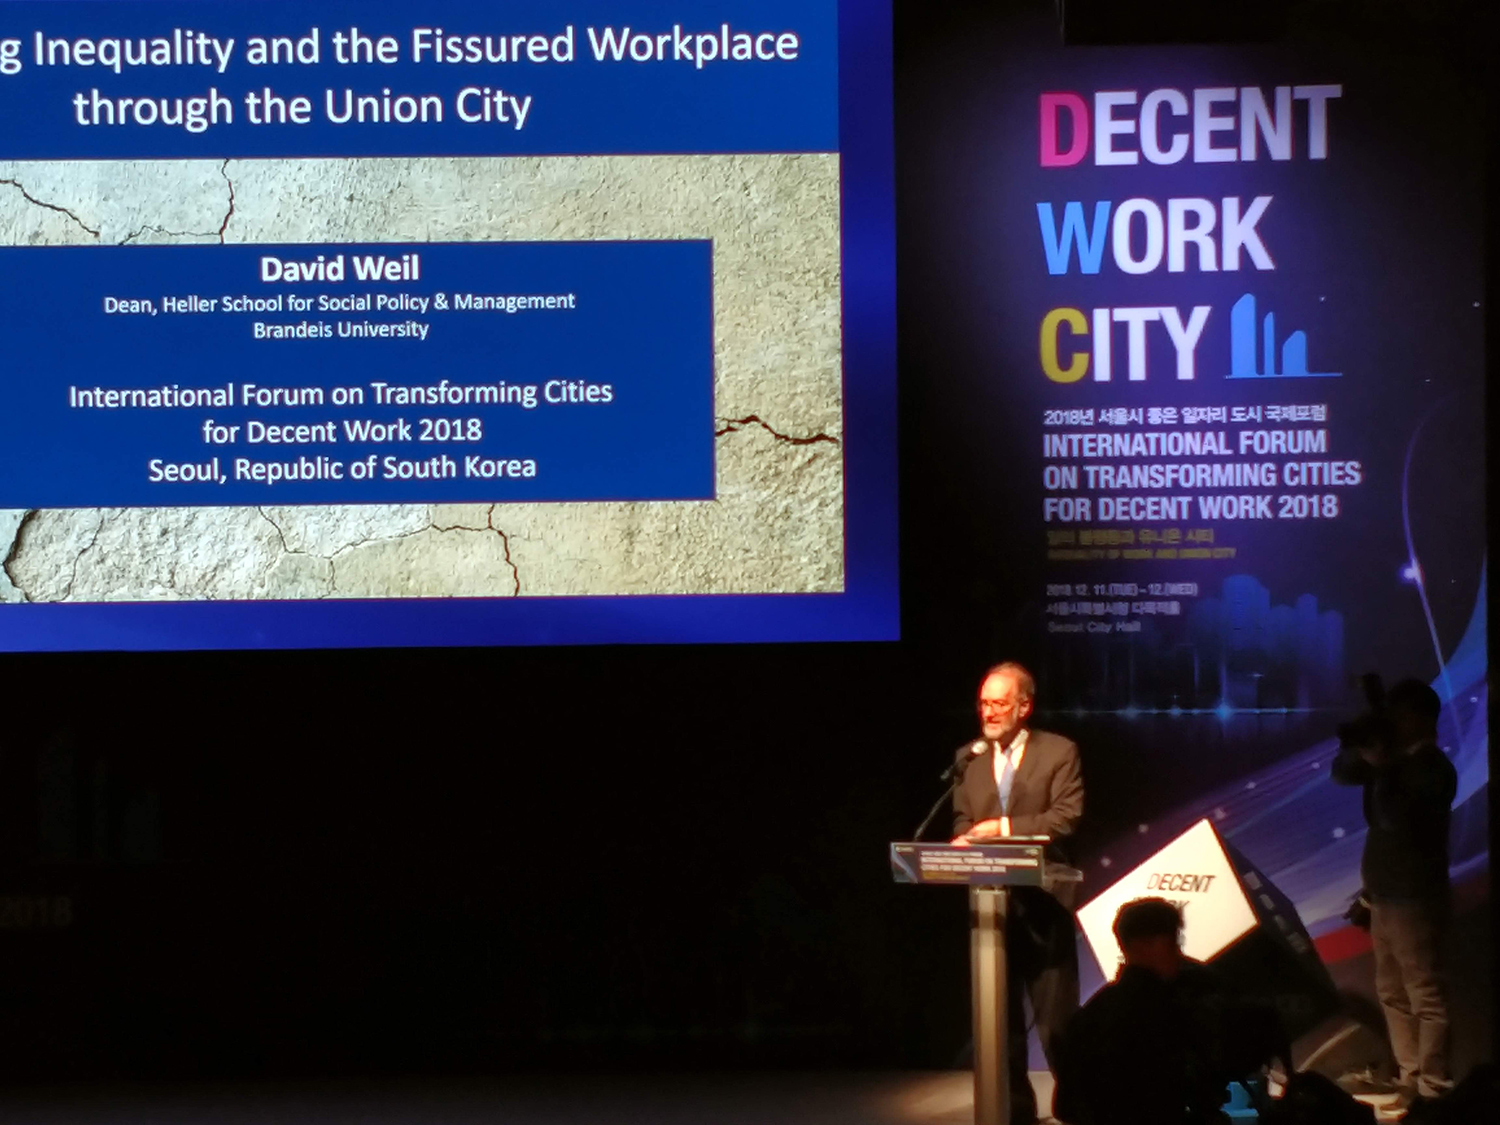 Dean Weil delivering keynote address in Seoul